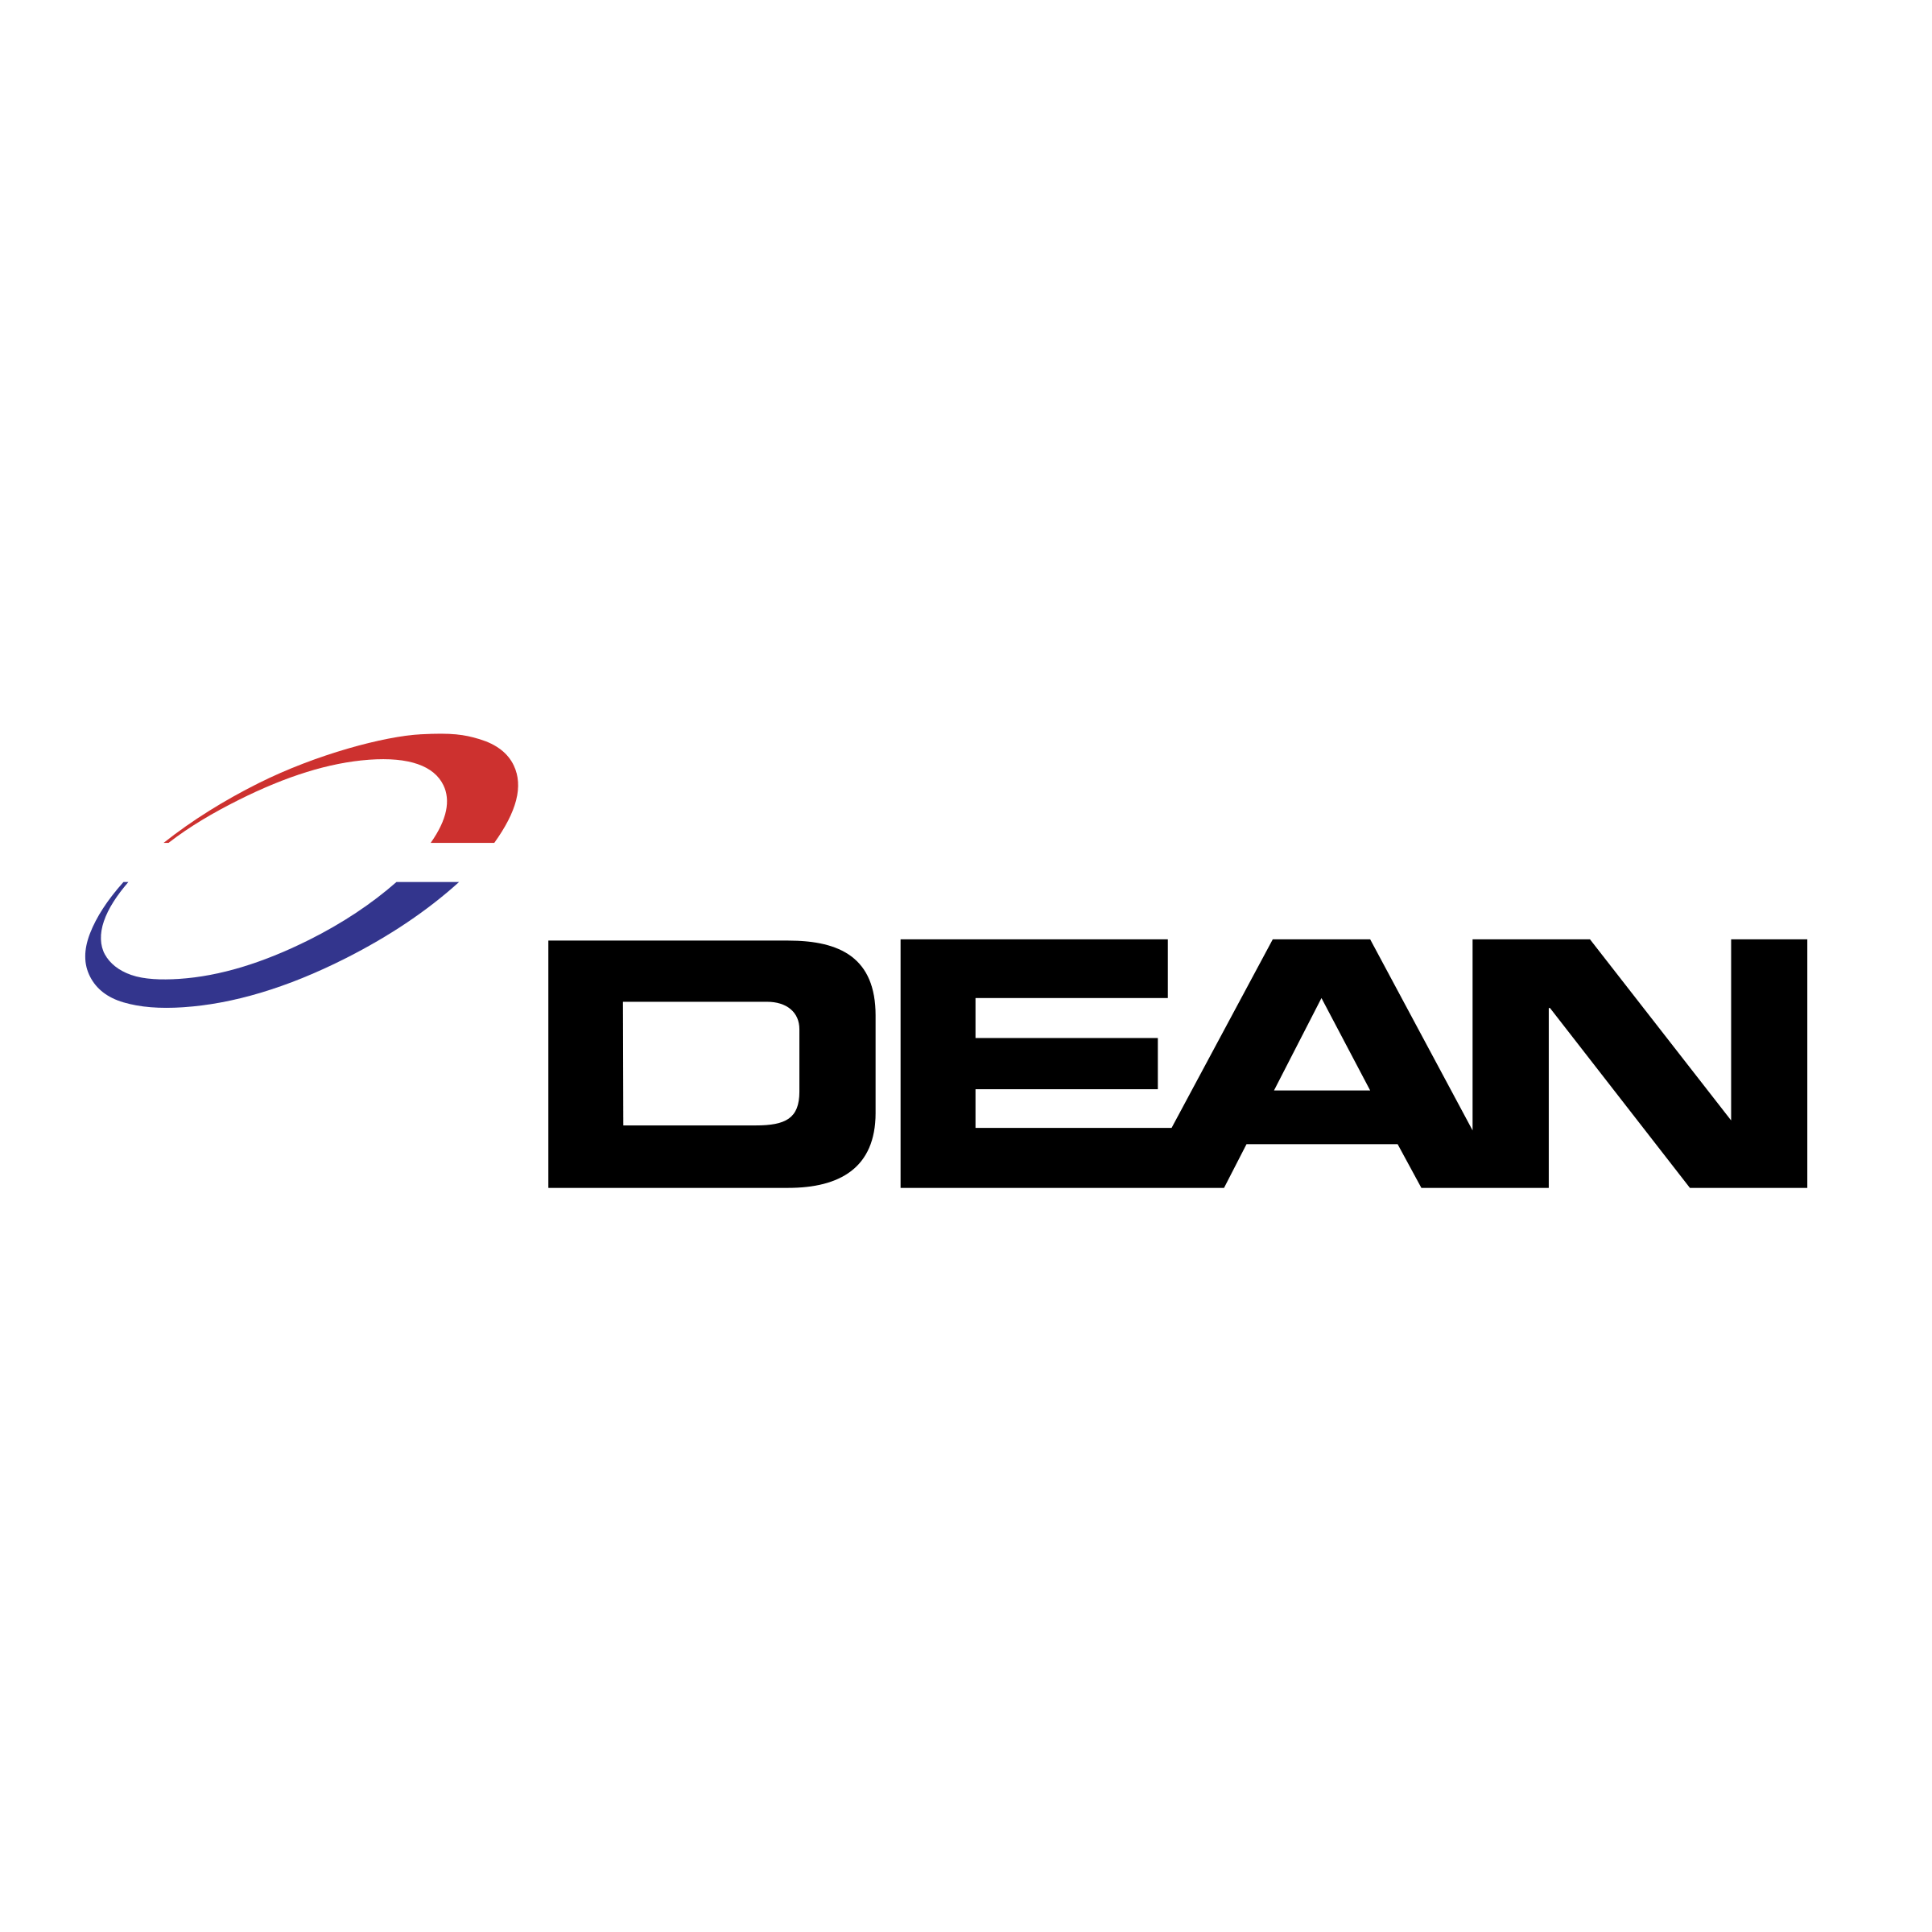 Dean Logo - Dean Logo PNG Transparent & SVG Vector - Freebie Supply